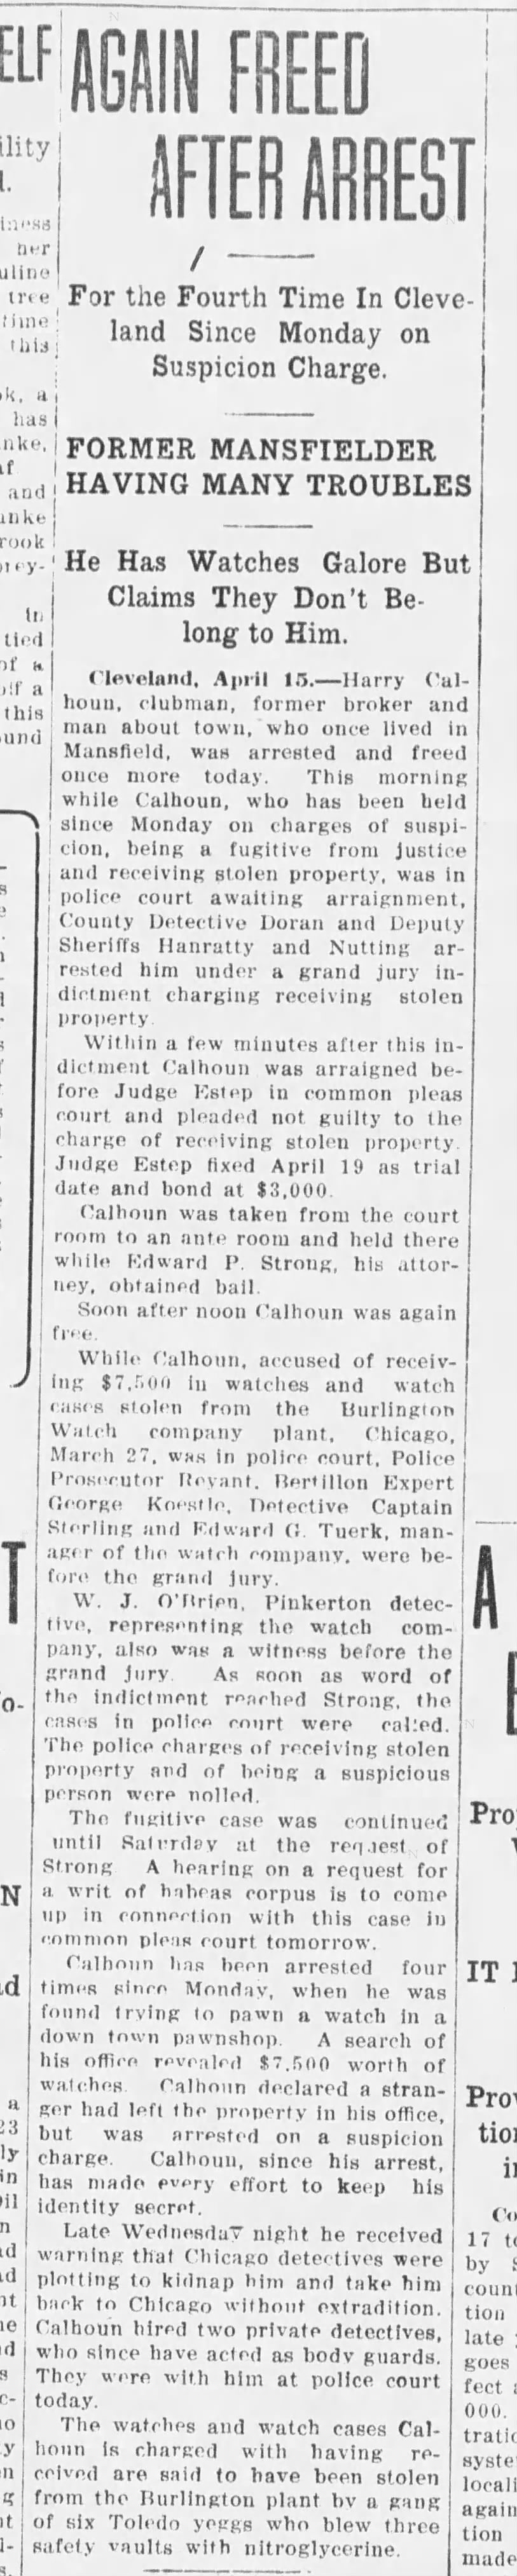 Calhoun Freed after Burlington Watch Heist